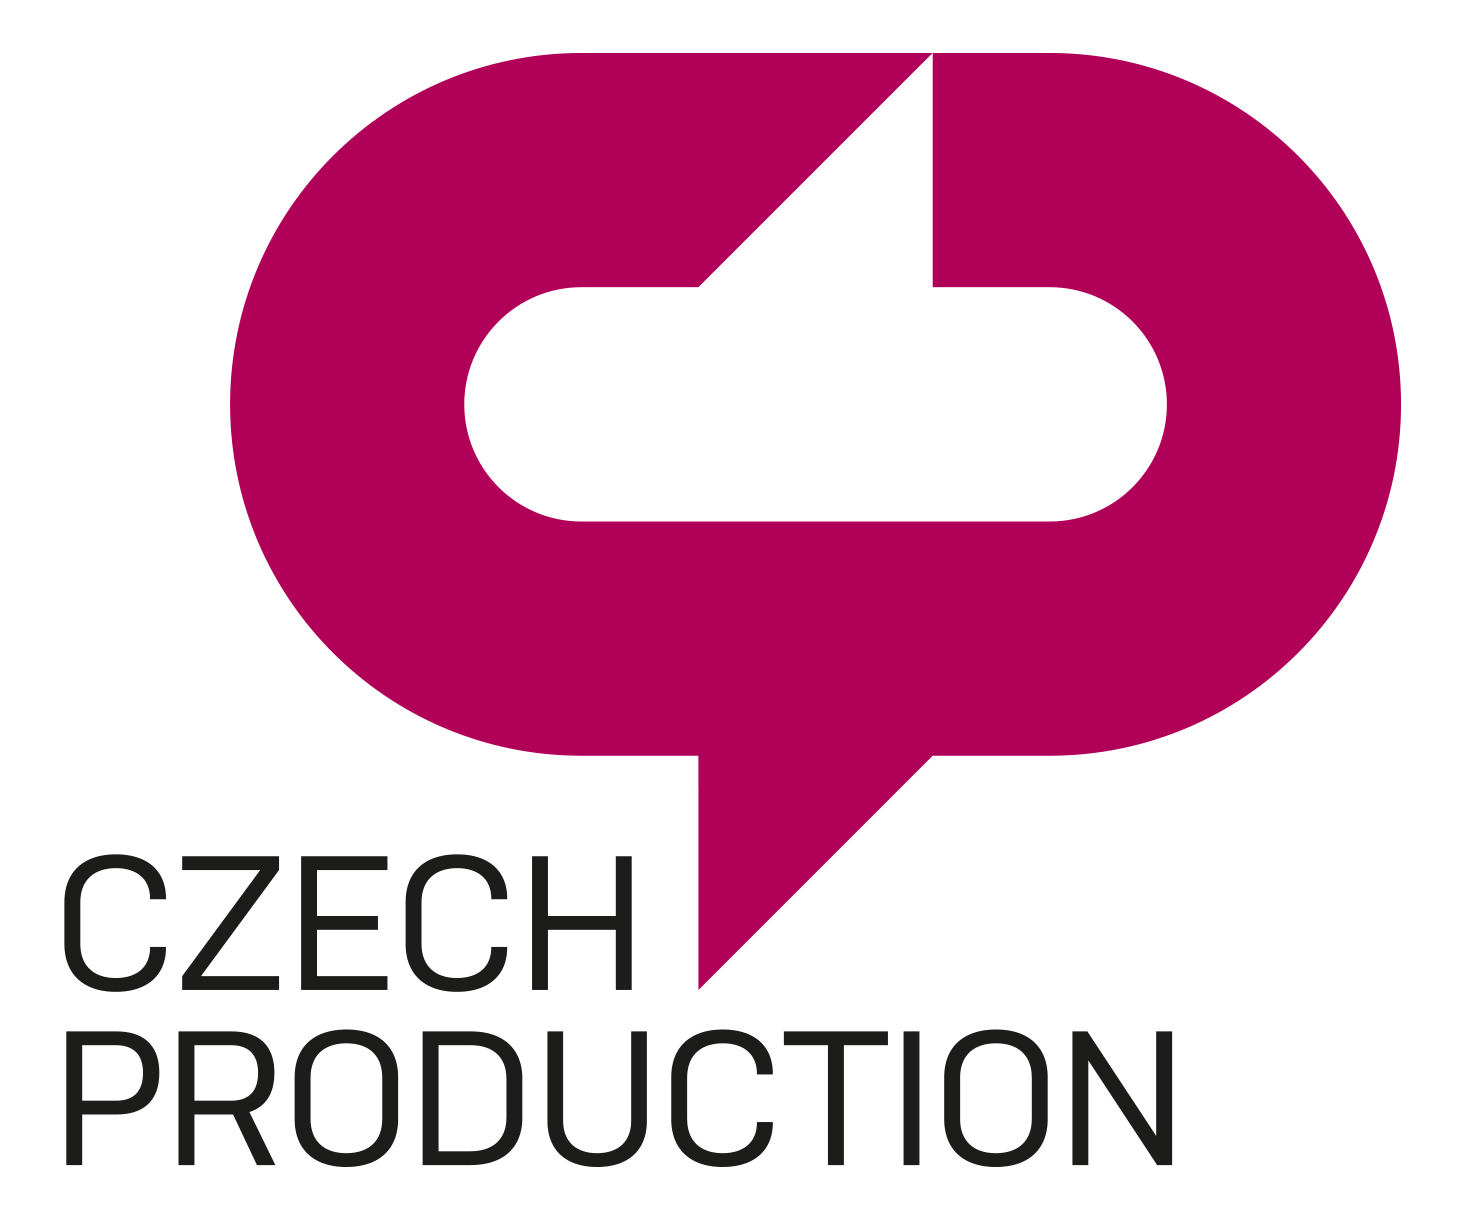 Czech production logo cp 1